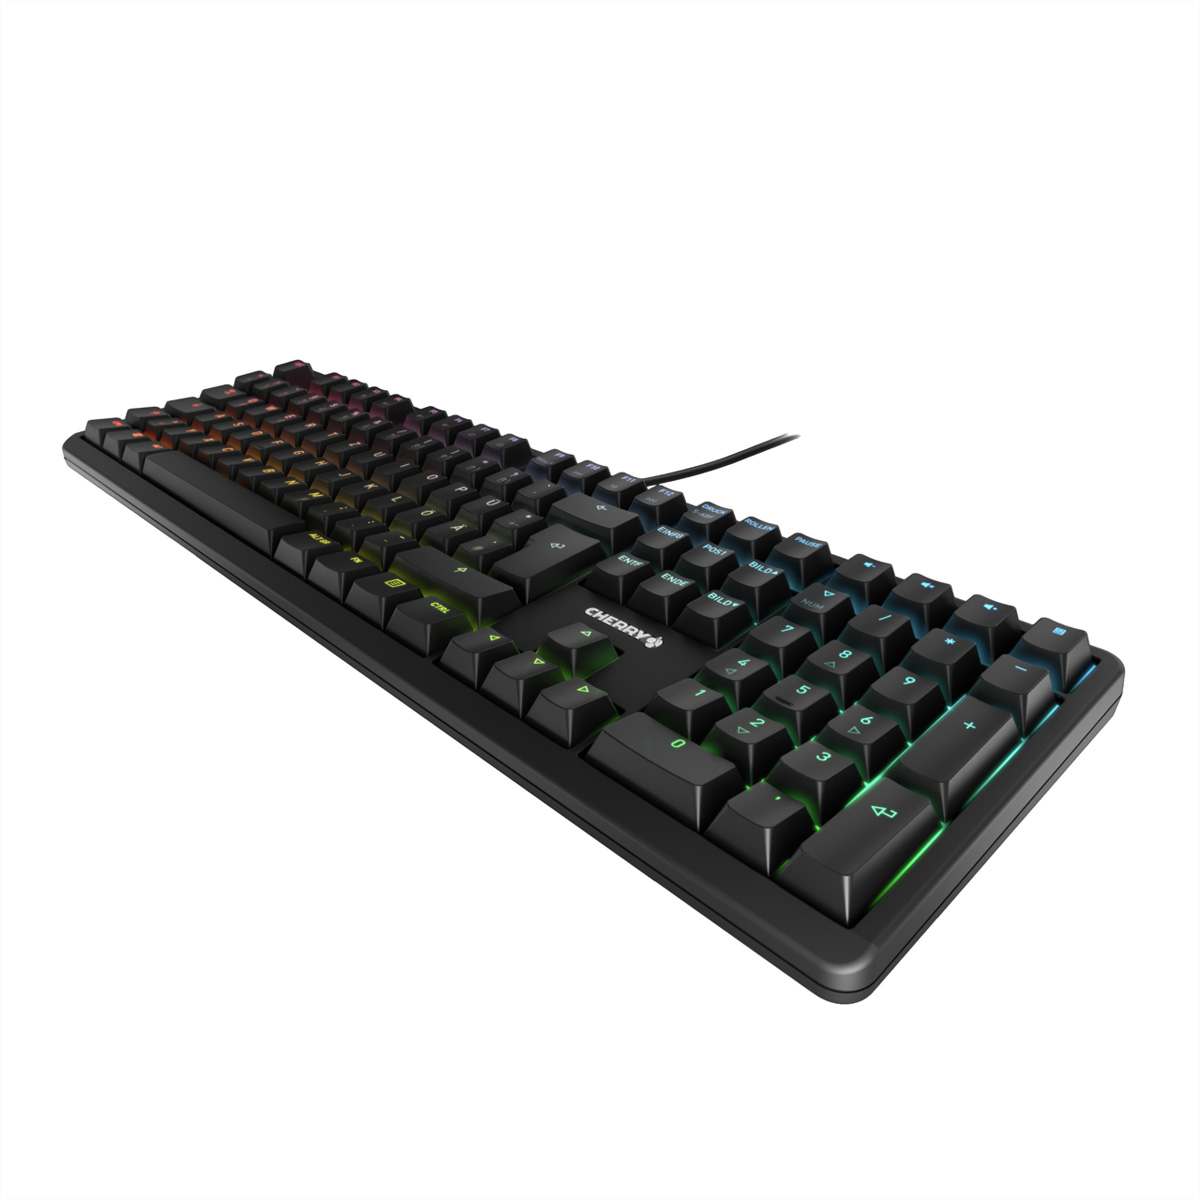 Cherry TAS G80-3000N RGB - Tastatur - Qwertz